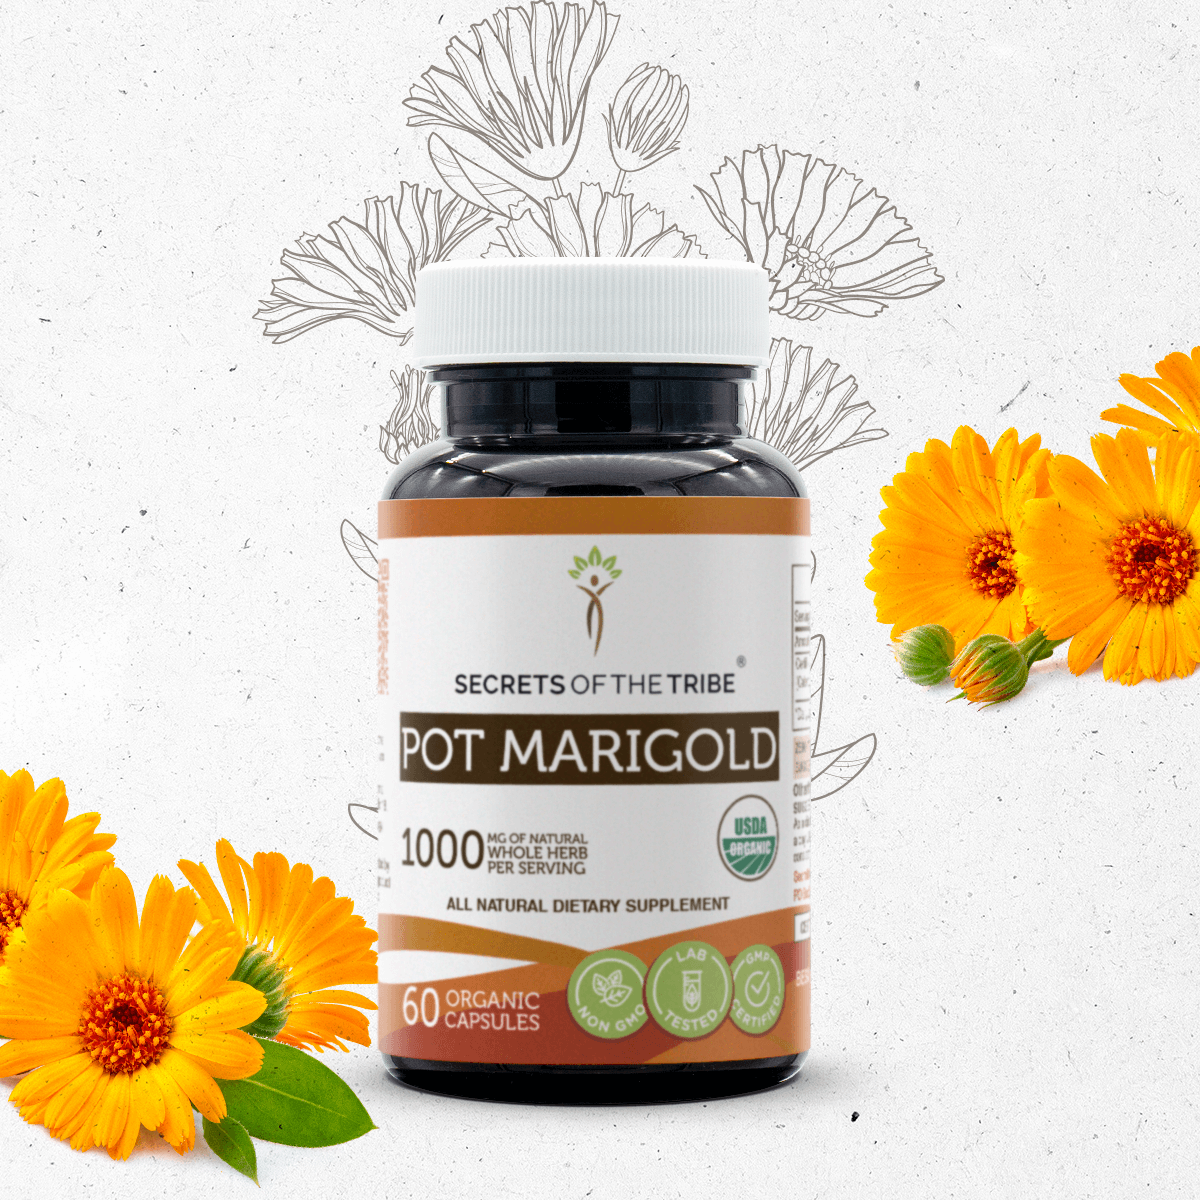 Pot Marigold Capsules|60&120 Capsules|Certified|Organic